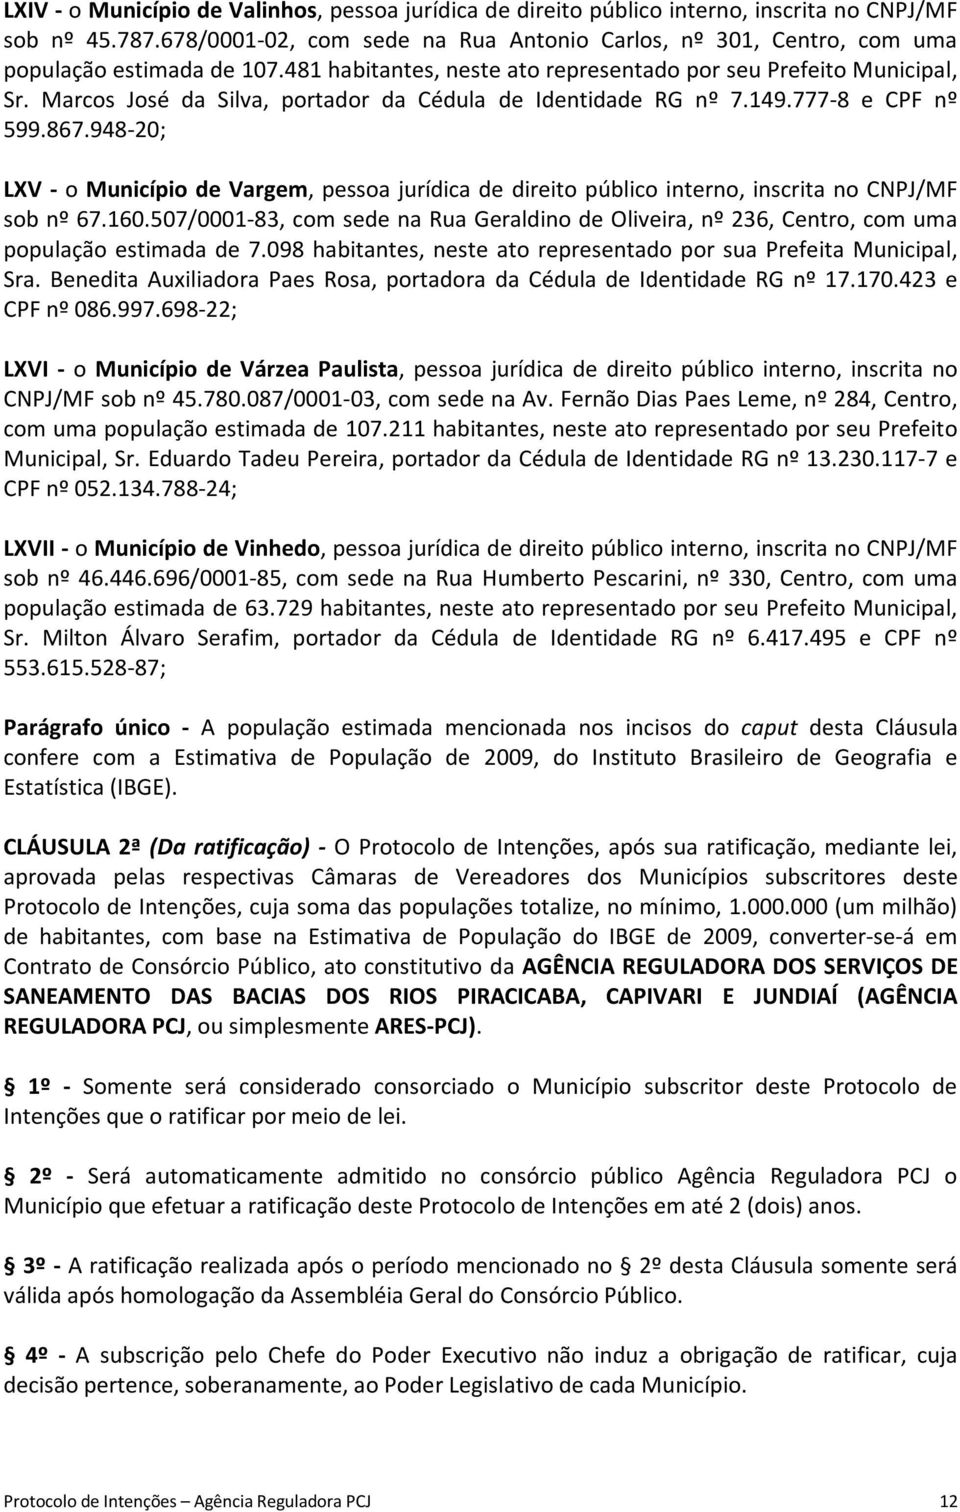 Marcos José da Silva, portador da Cédula de Identidade RG nº 7.149.777-8 e CPF nº 599.867.